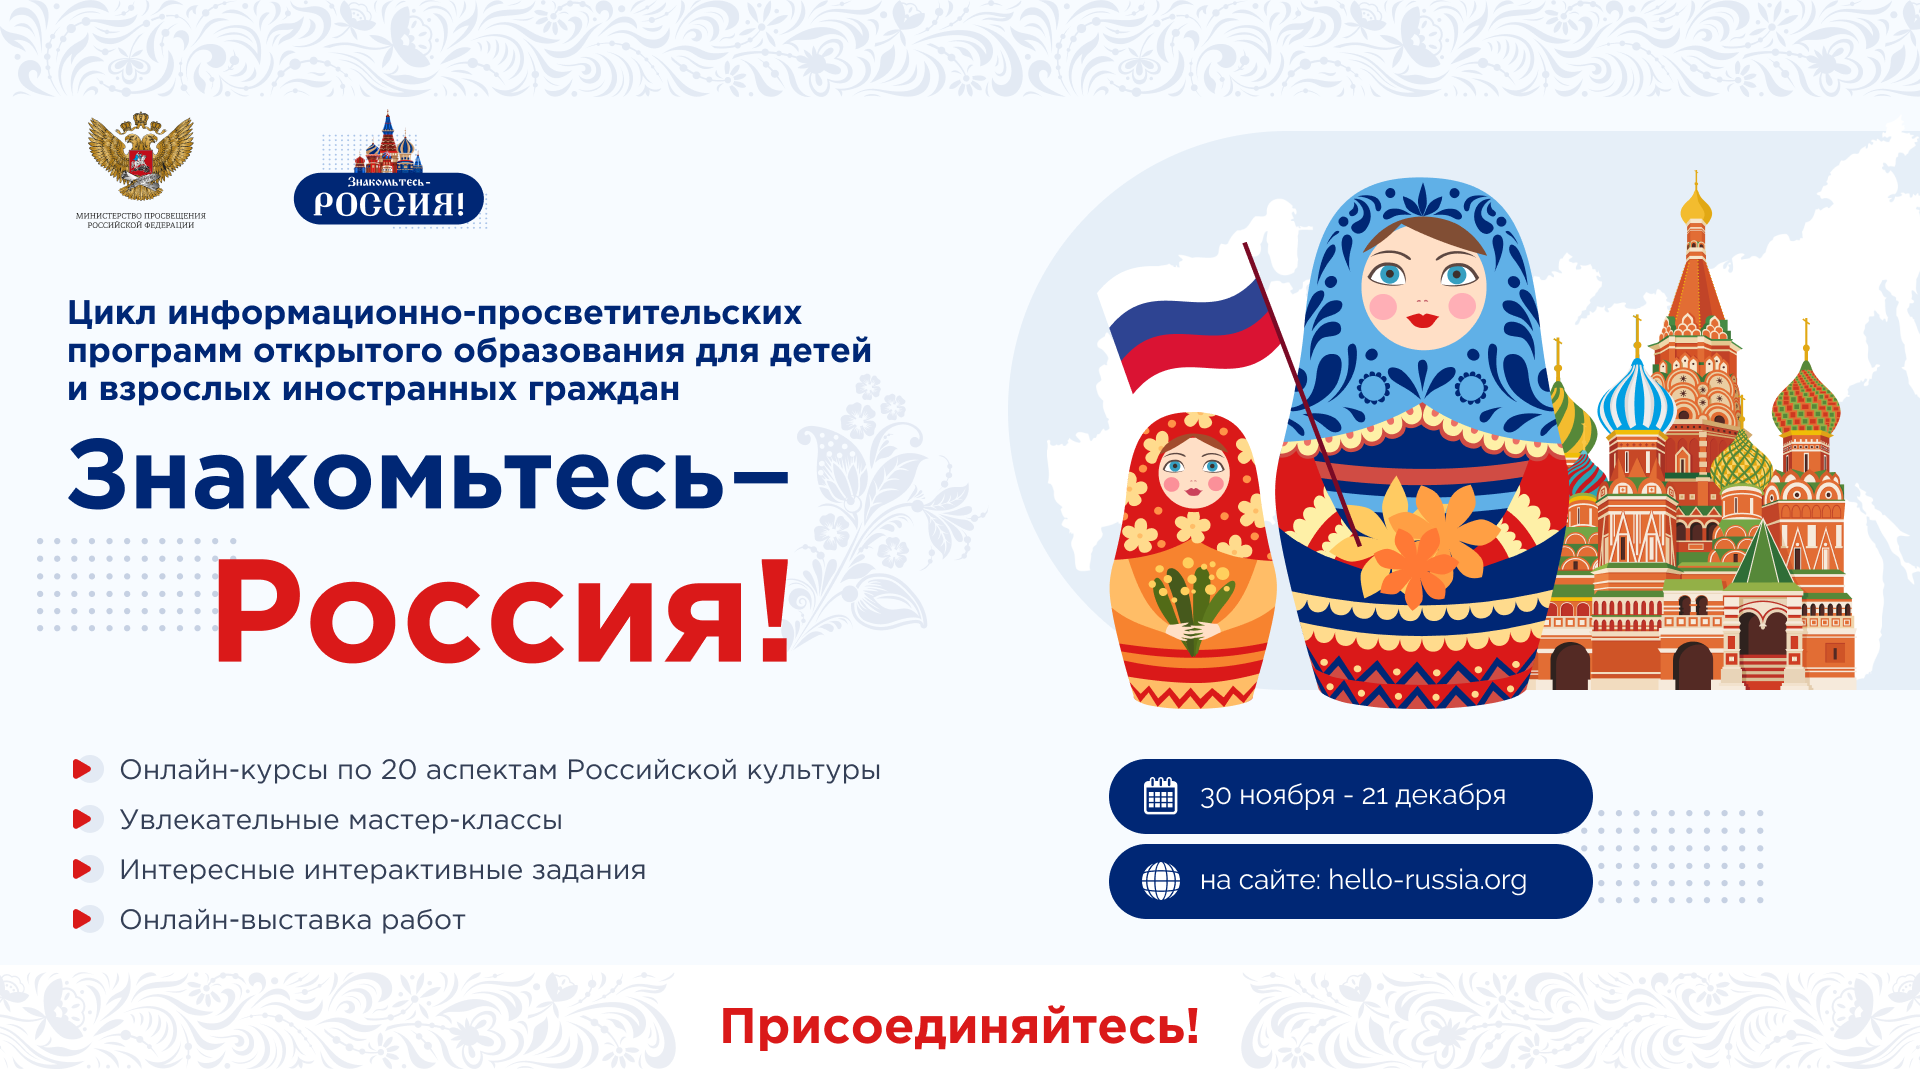 Сайт russia org